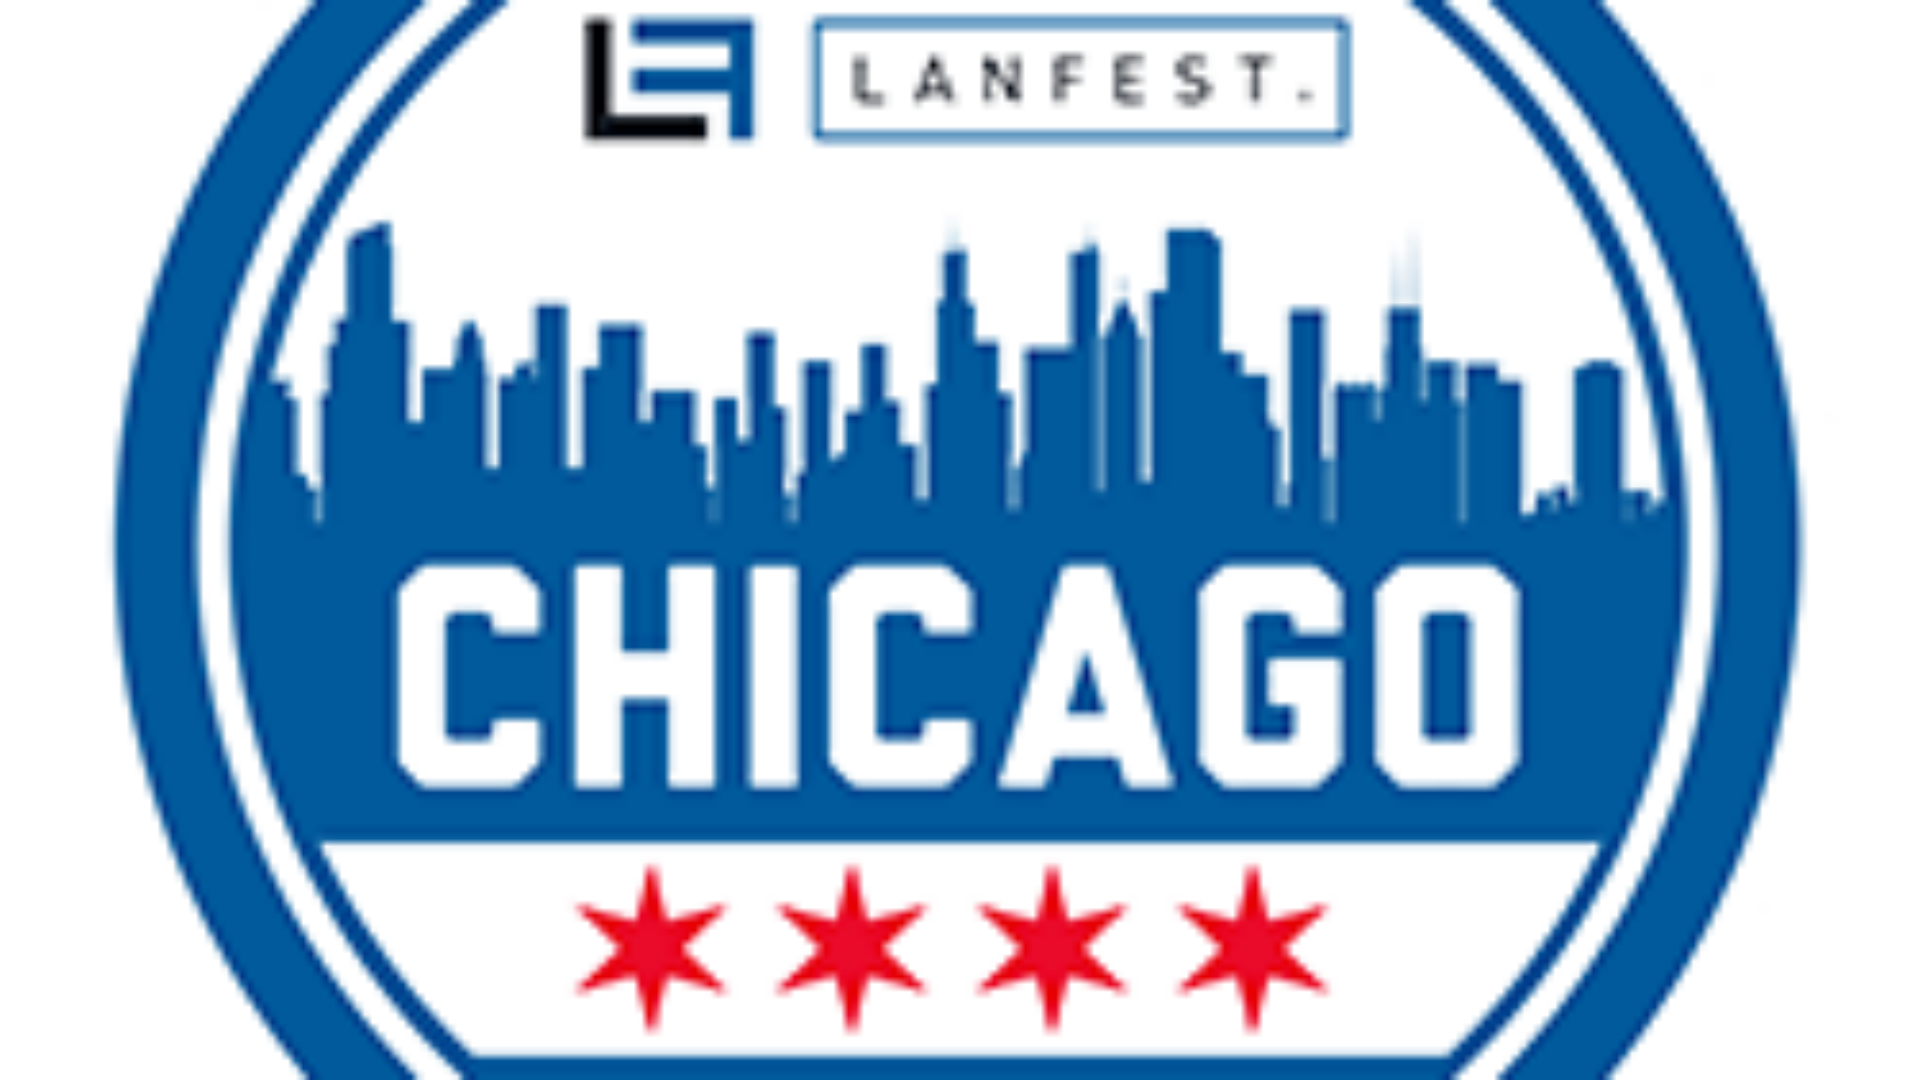 Lanfest_Chicago_-_new-01-1